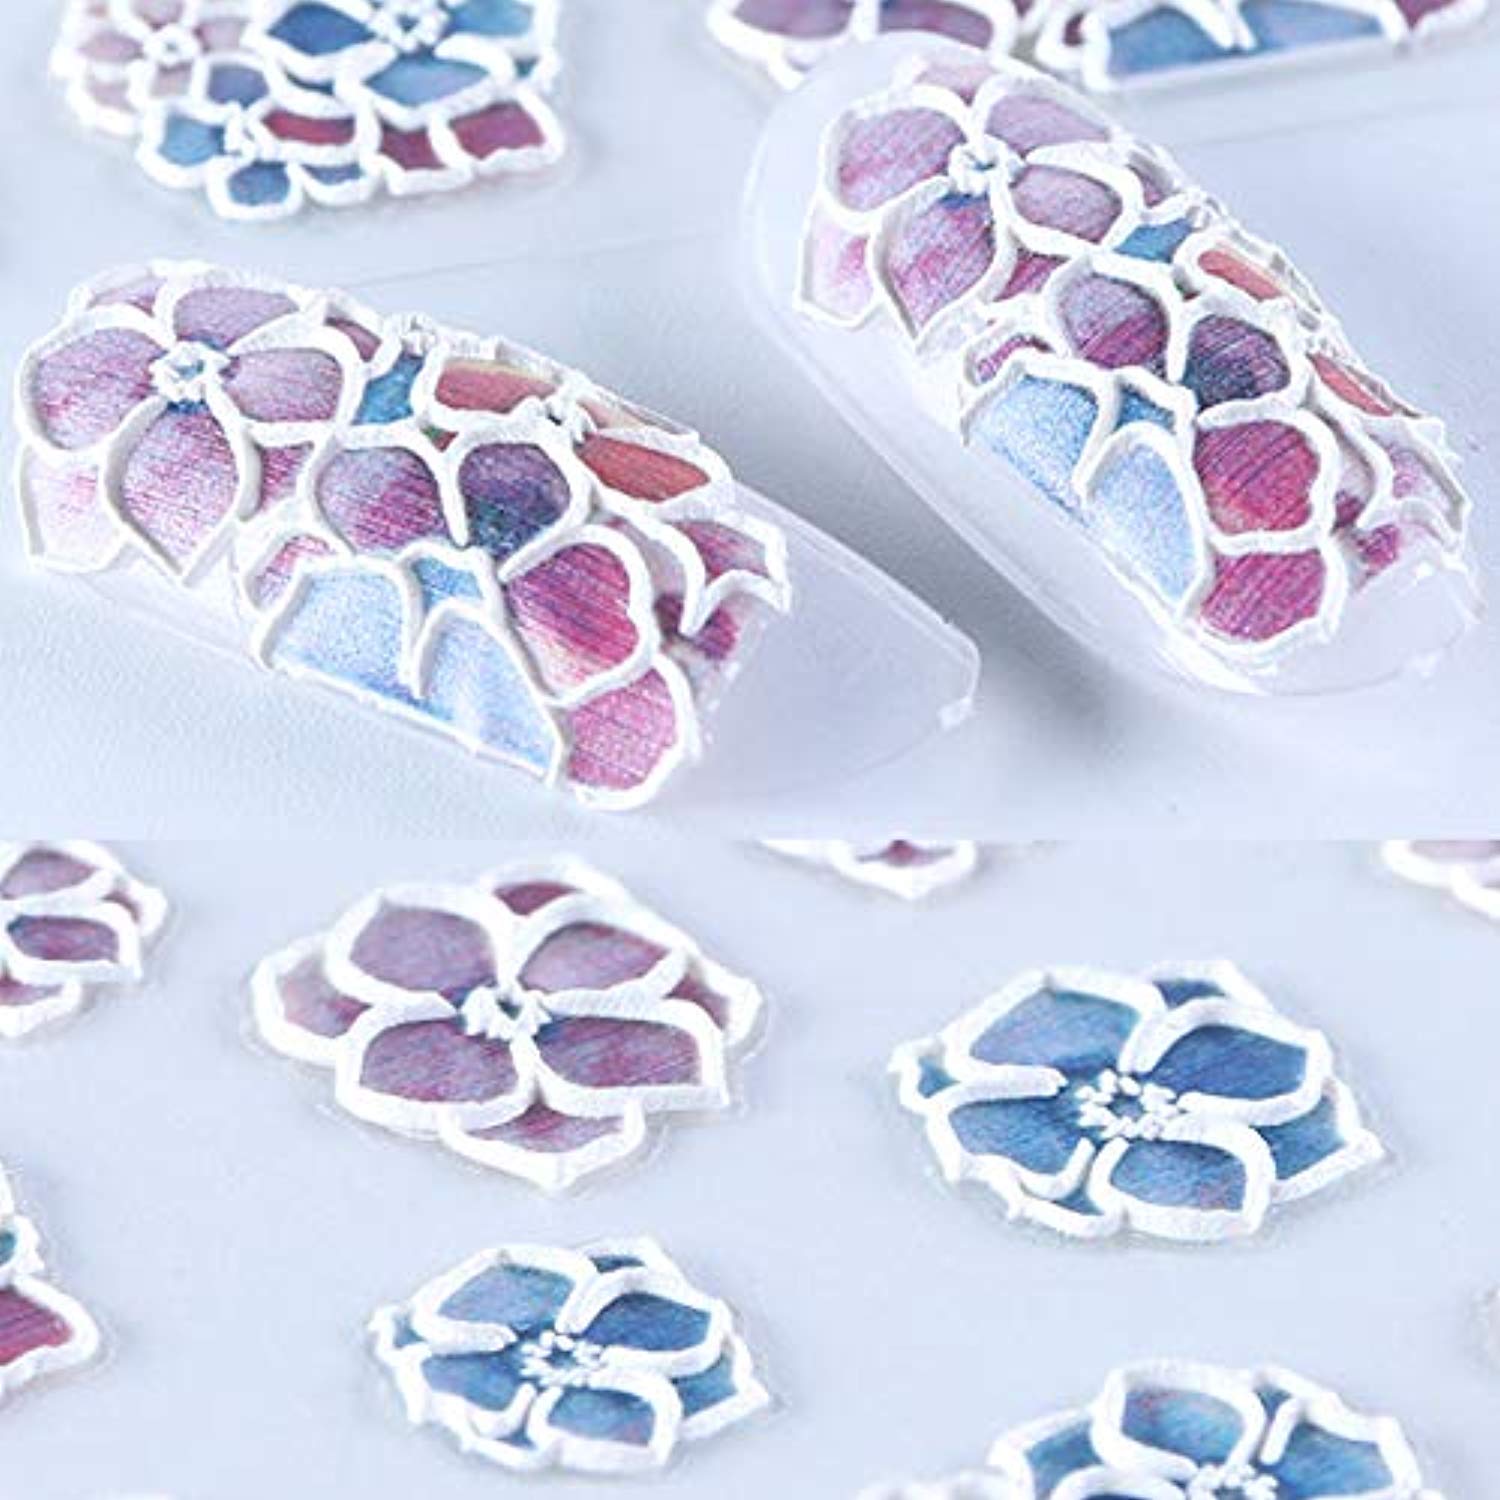 5D Embossed Flowers Nail Stickers (4 Sheets)-Nail Sticker-JAYDEN- Nail Supply American Gel Polish - Phuong Ni